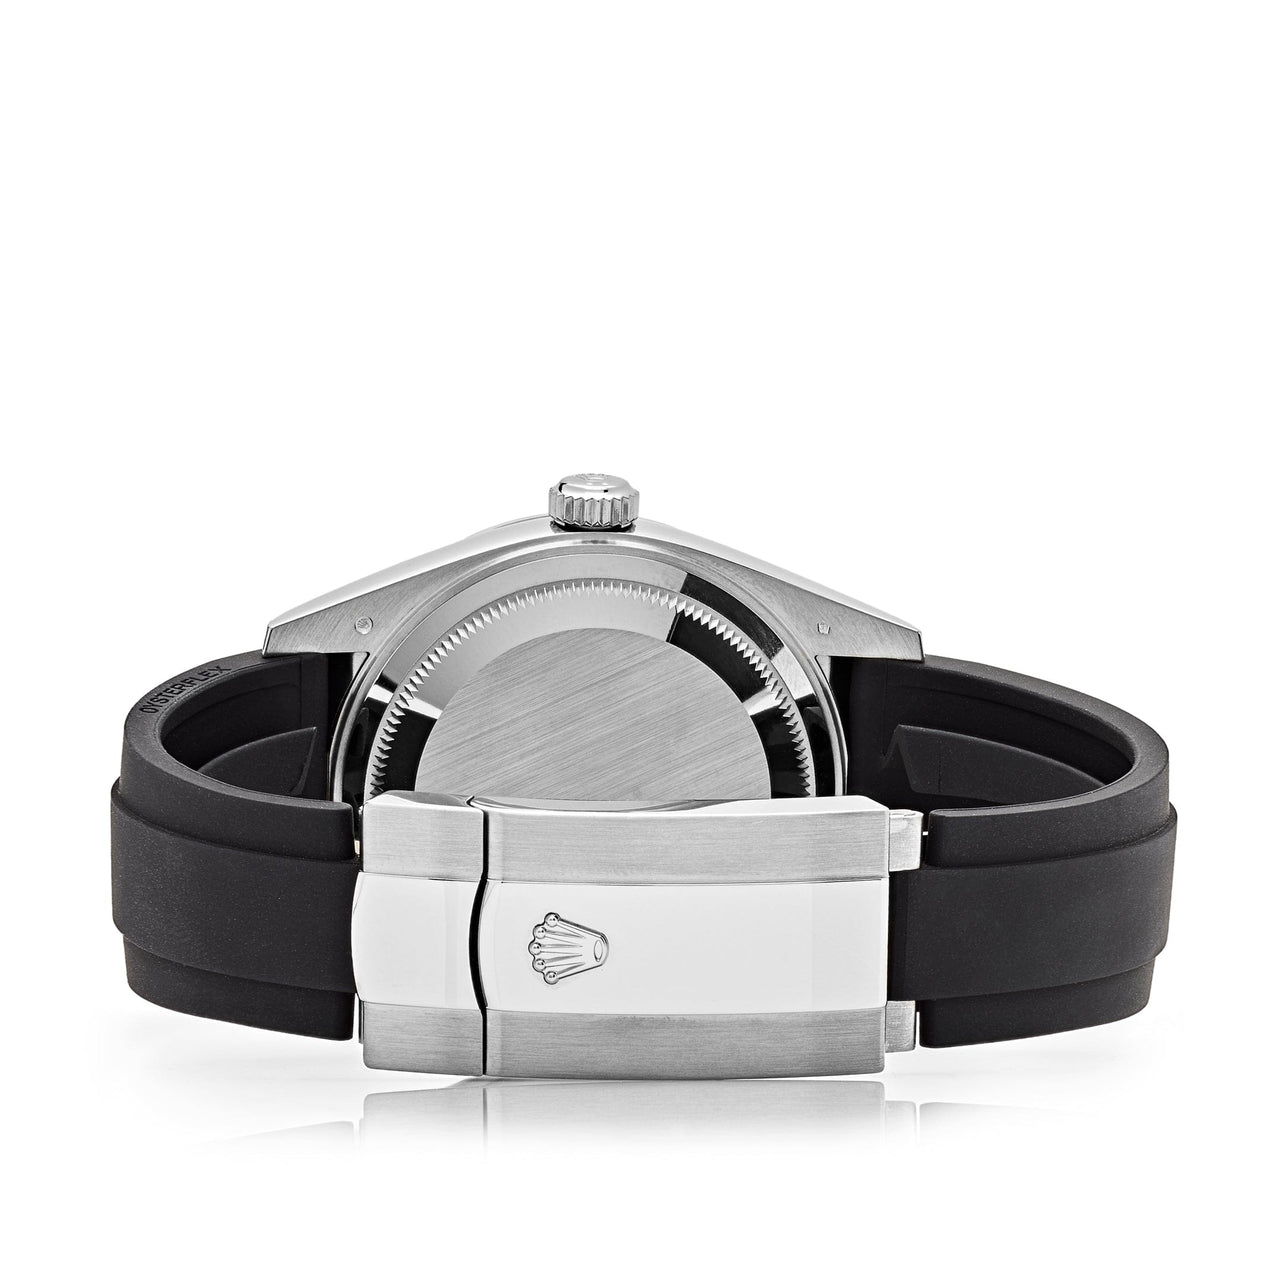 Luxury Watch Rolex Sky-Dweller 42 White Gold White Dial Oysterflex 336239 Wrist Aficionado